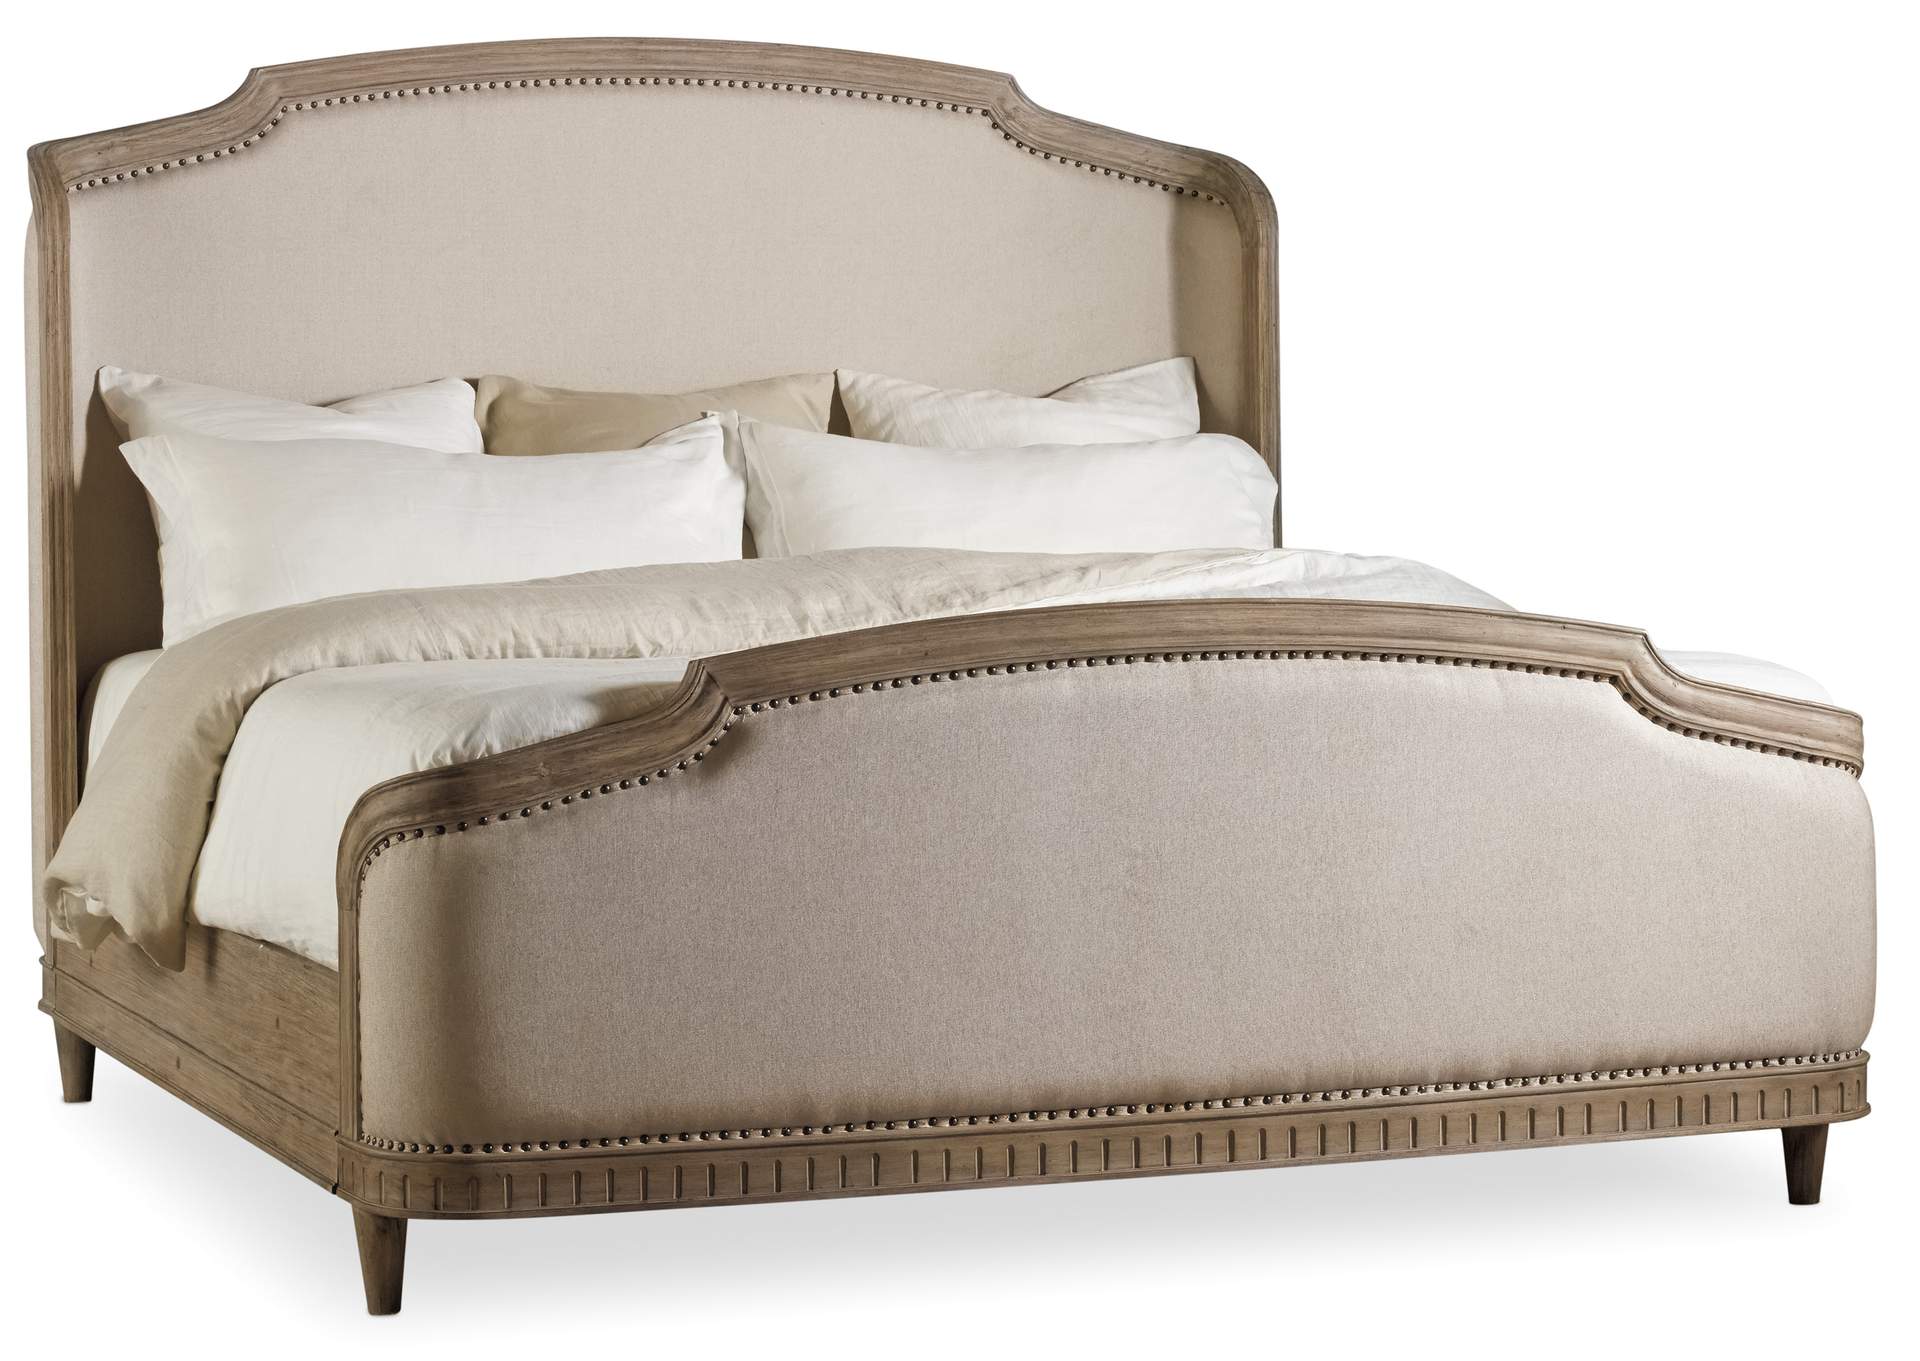 Corsica Queen Upholstery Shelter Bed,Hooker Furniture